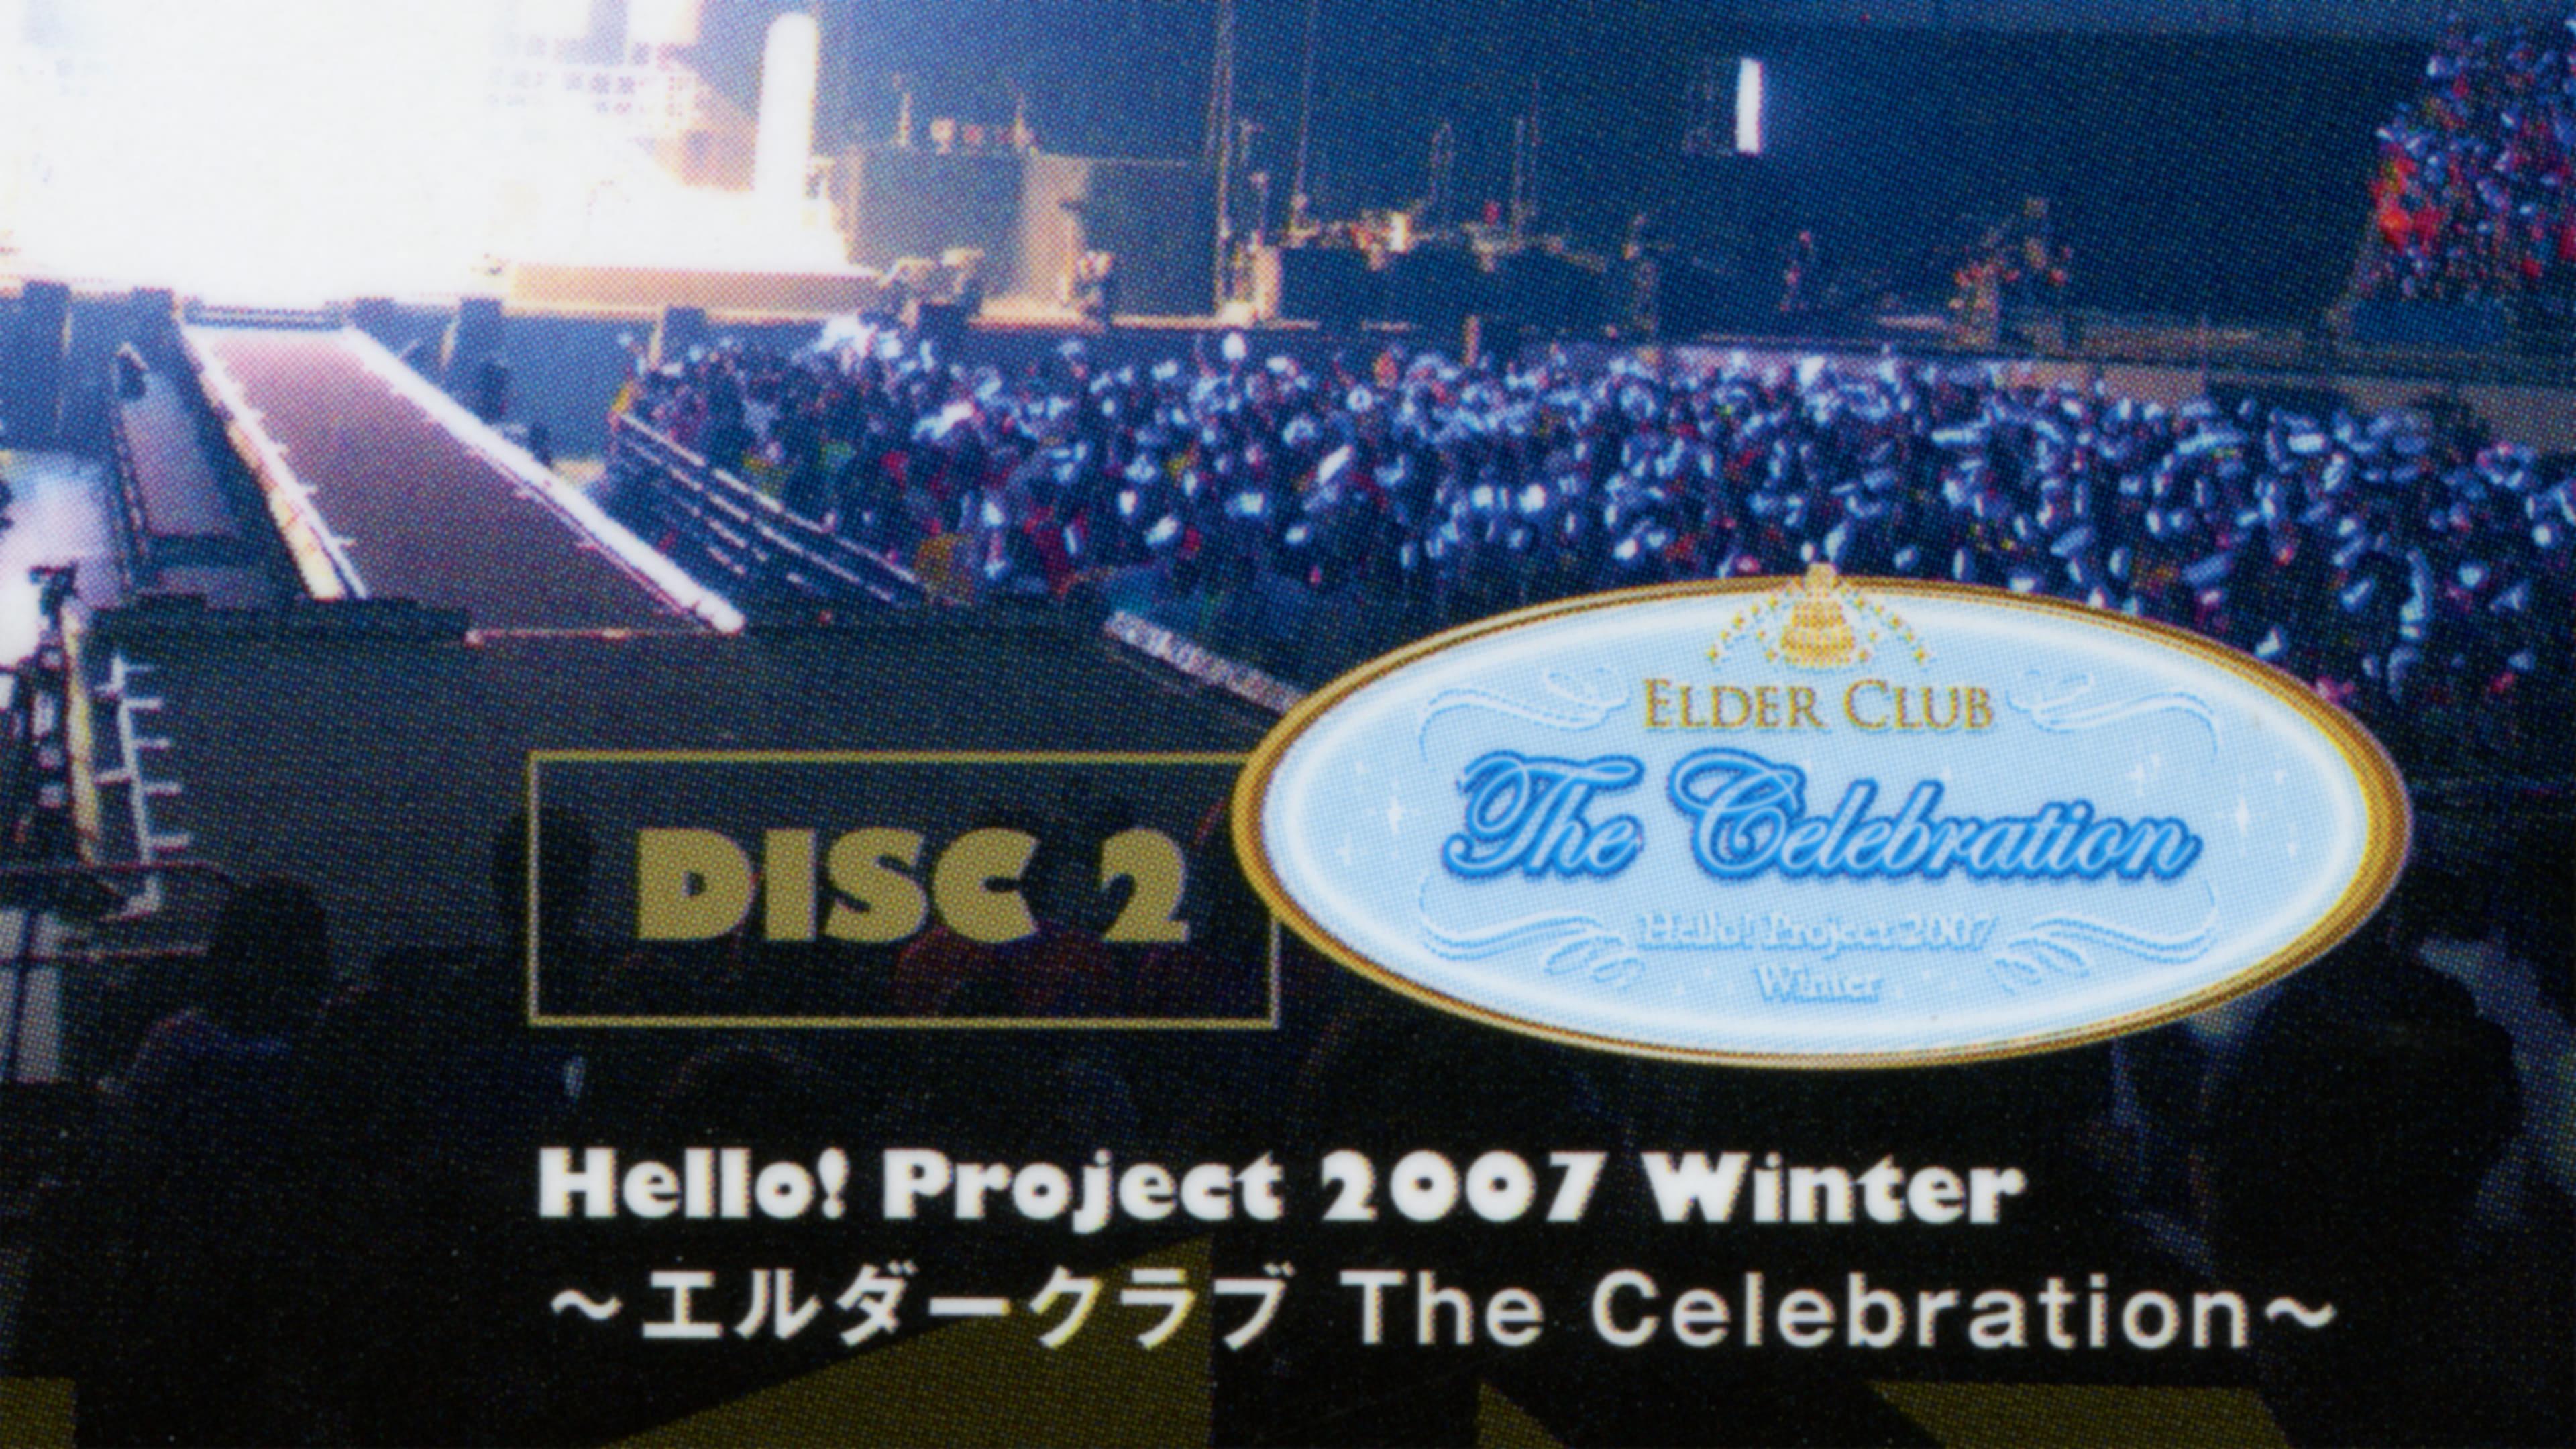 Hello! Project 2007 Winter ~Elder Club The Celebration~ backdrop